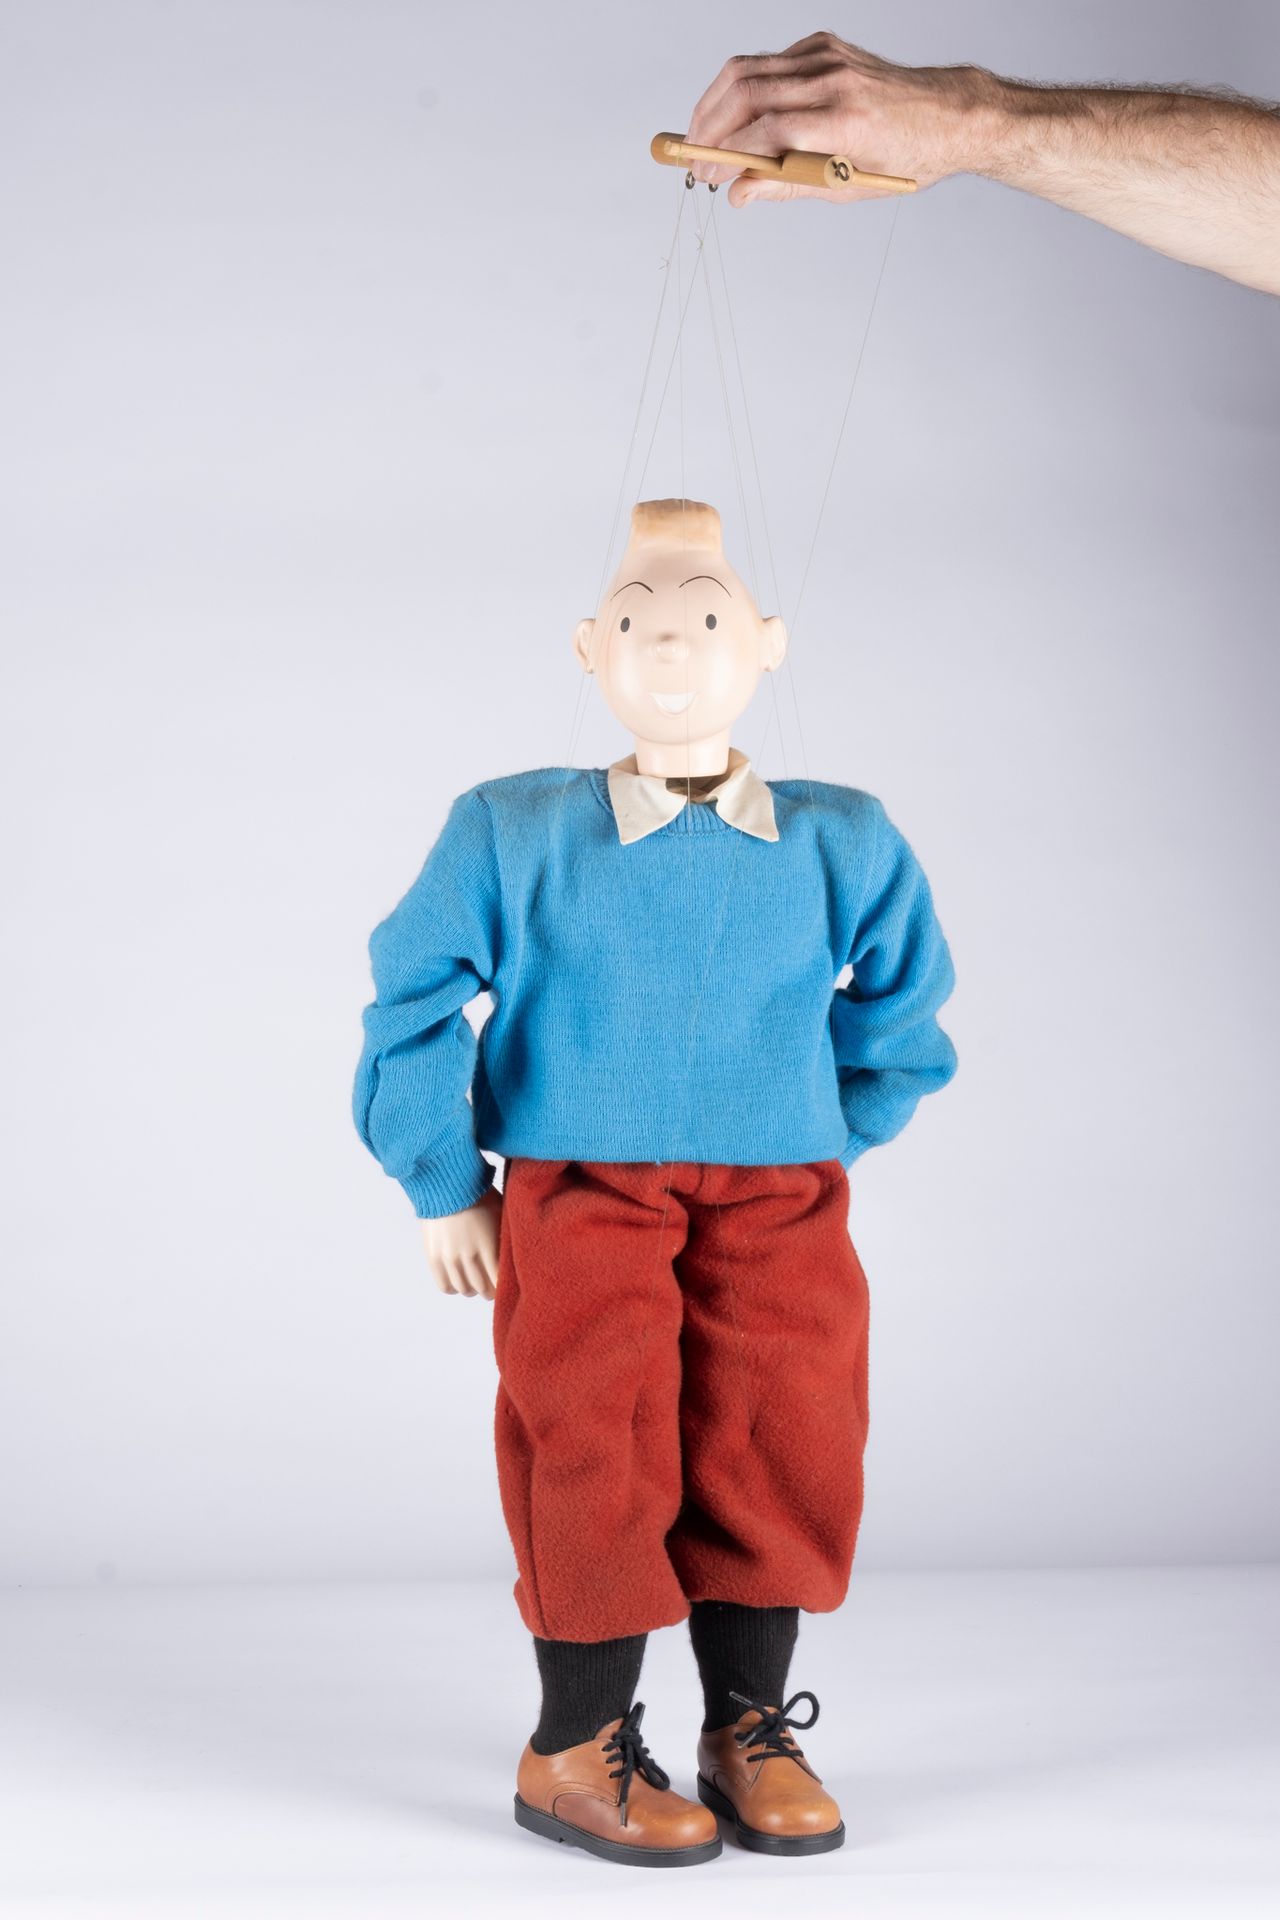 HERGÉ, Georges Remi dit (1907-1983) 大型丁丁木偶，Leblon-Delienne，高80厘米，300份，状况良好，在颈部有编&hellip;